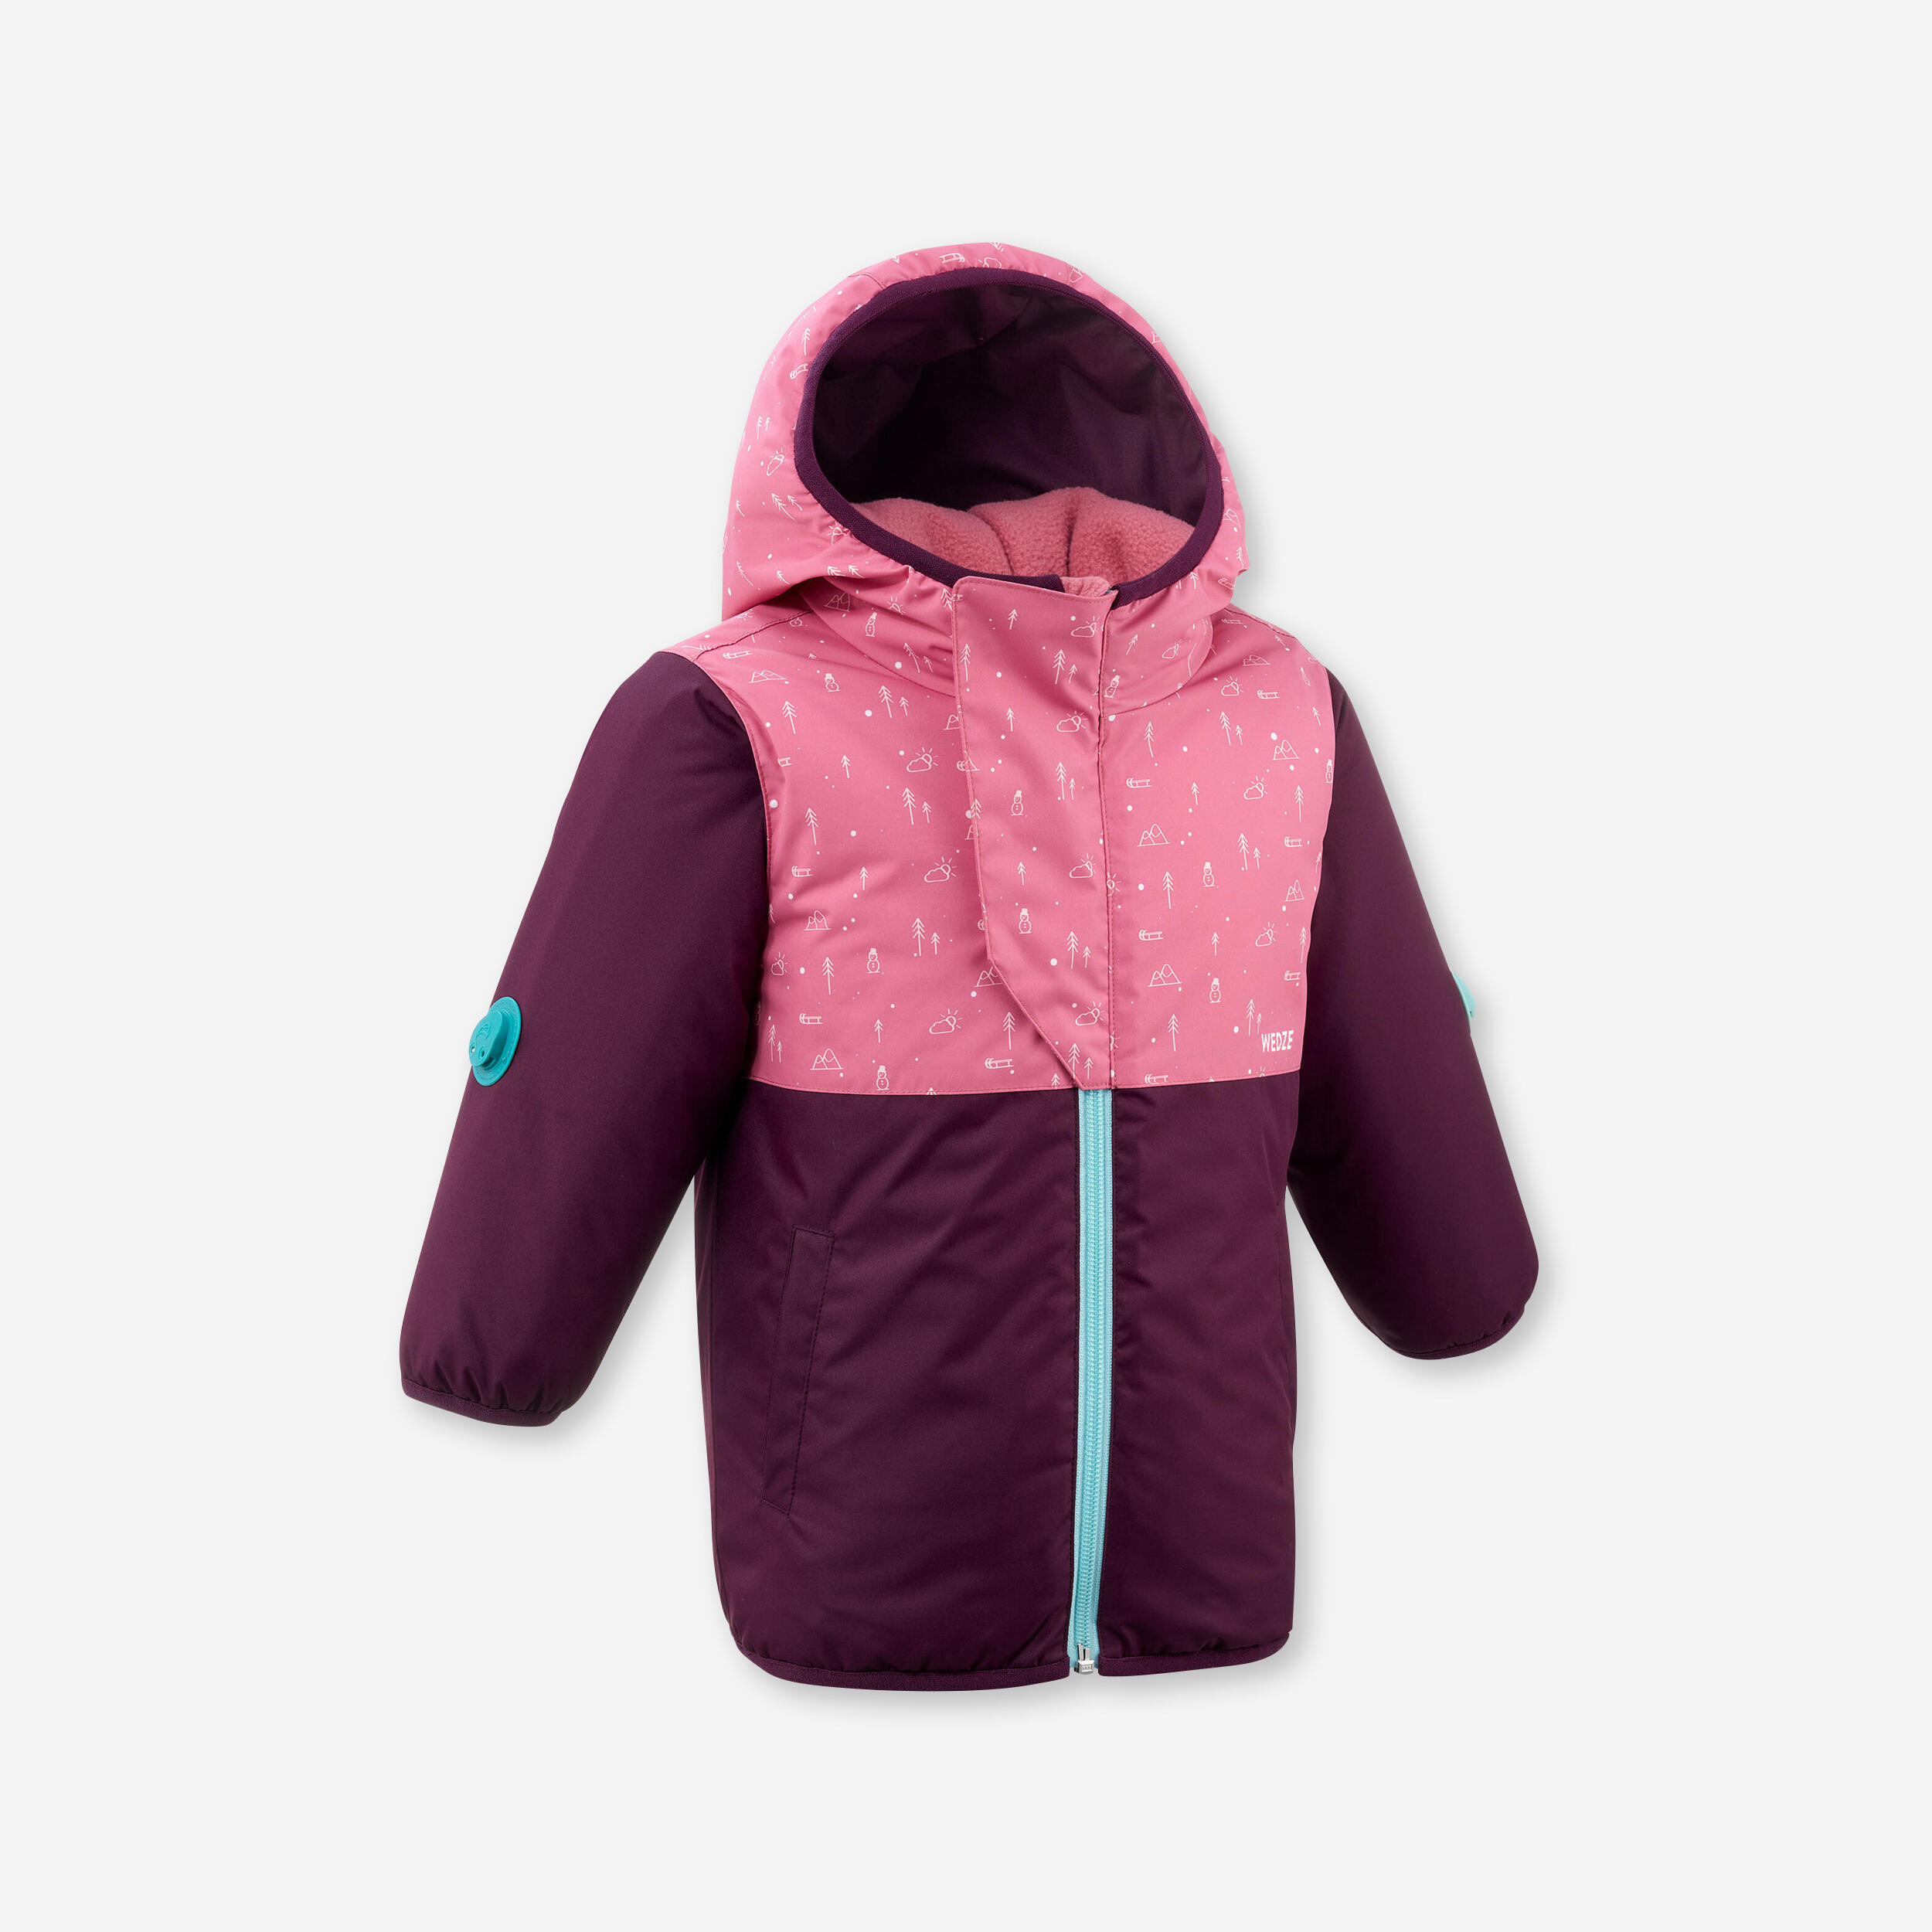 WEDZE Baby Ski Jacket WARM LUGIKLIP - Purple and Pink